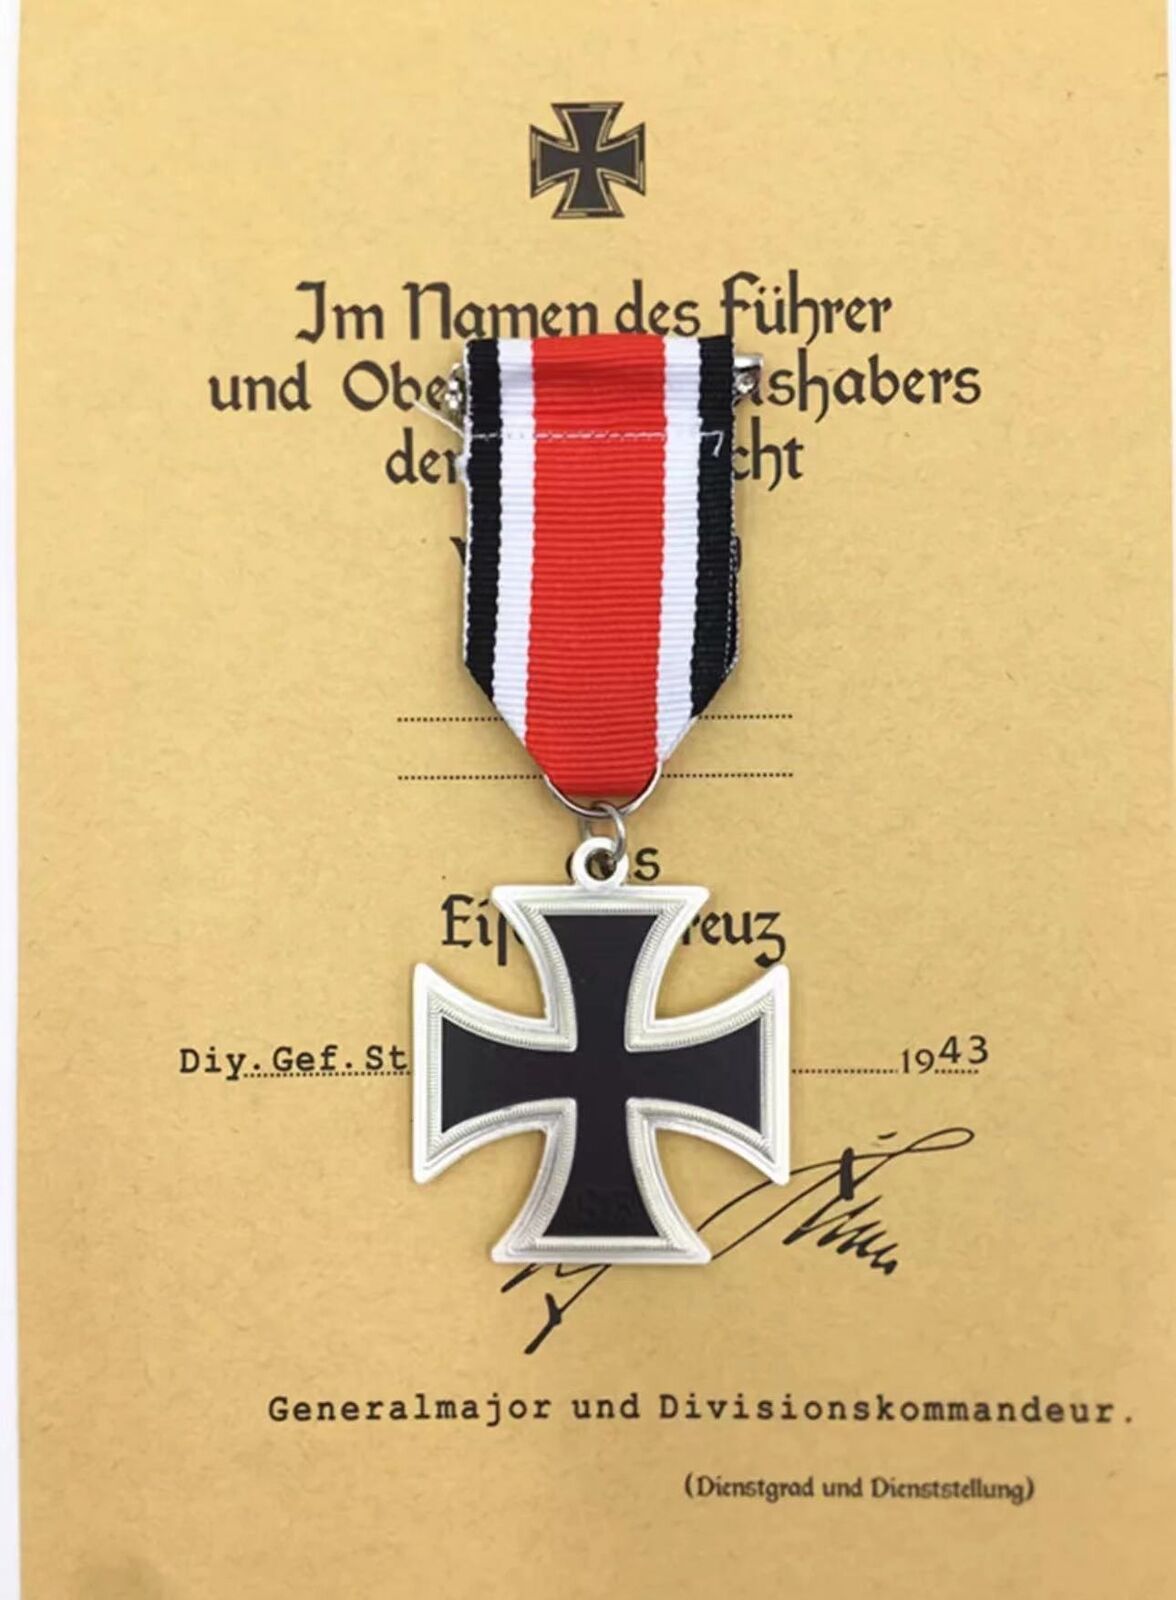 Germany 1939 Iron Cross Medal Badge 2nd Class with Ribbon - German World War II 